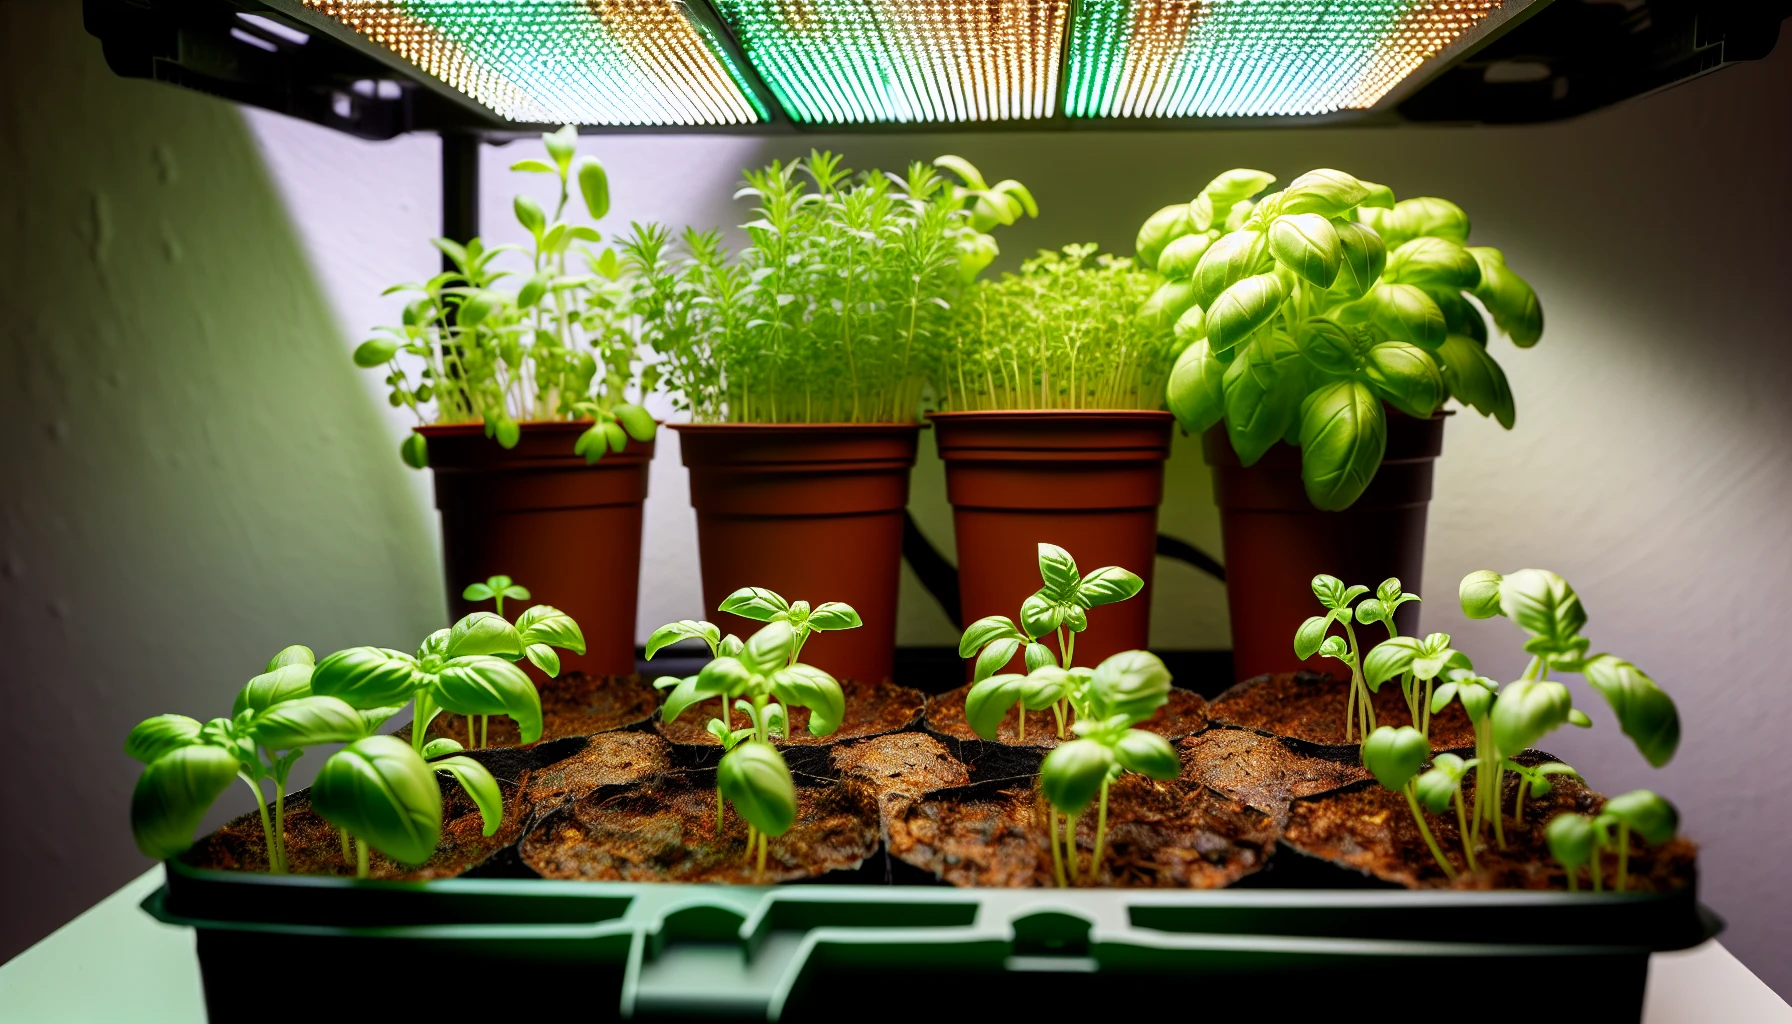 Herb seedlings in pots under grow lights